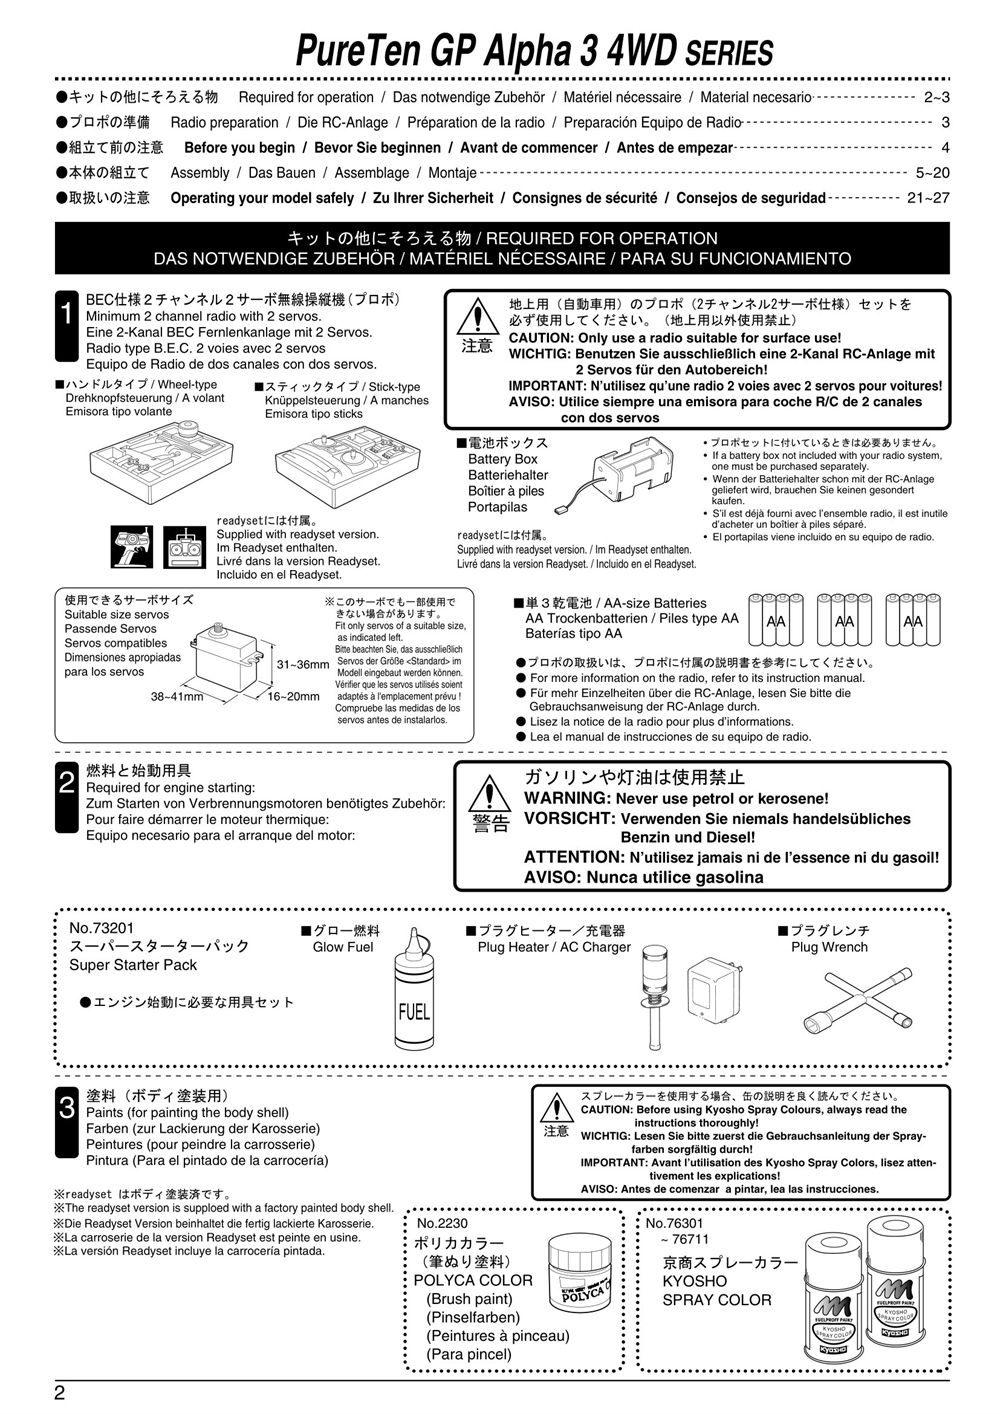 Kyosho - PureTen GP Alpha 3 - Manual - Page 2